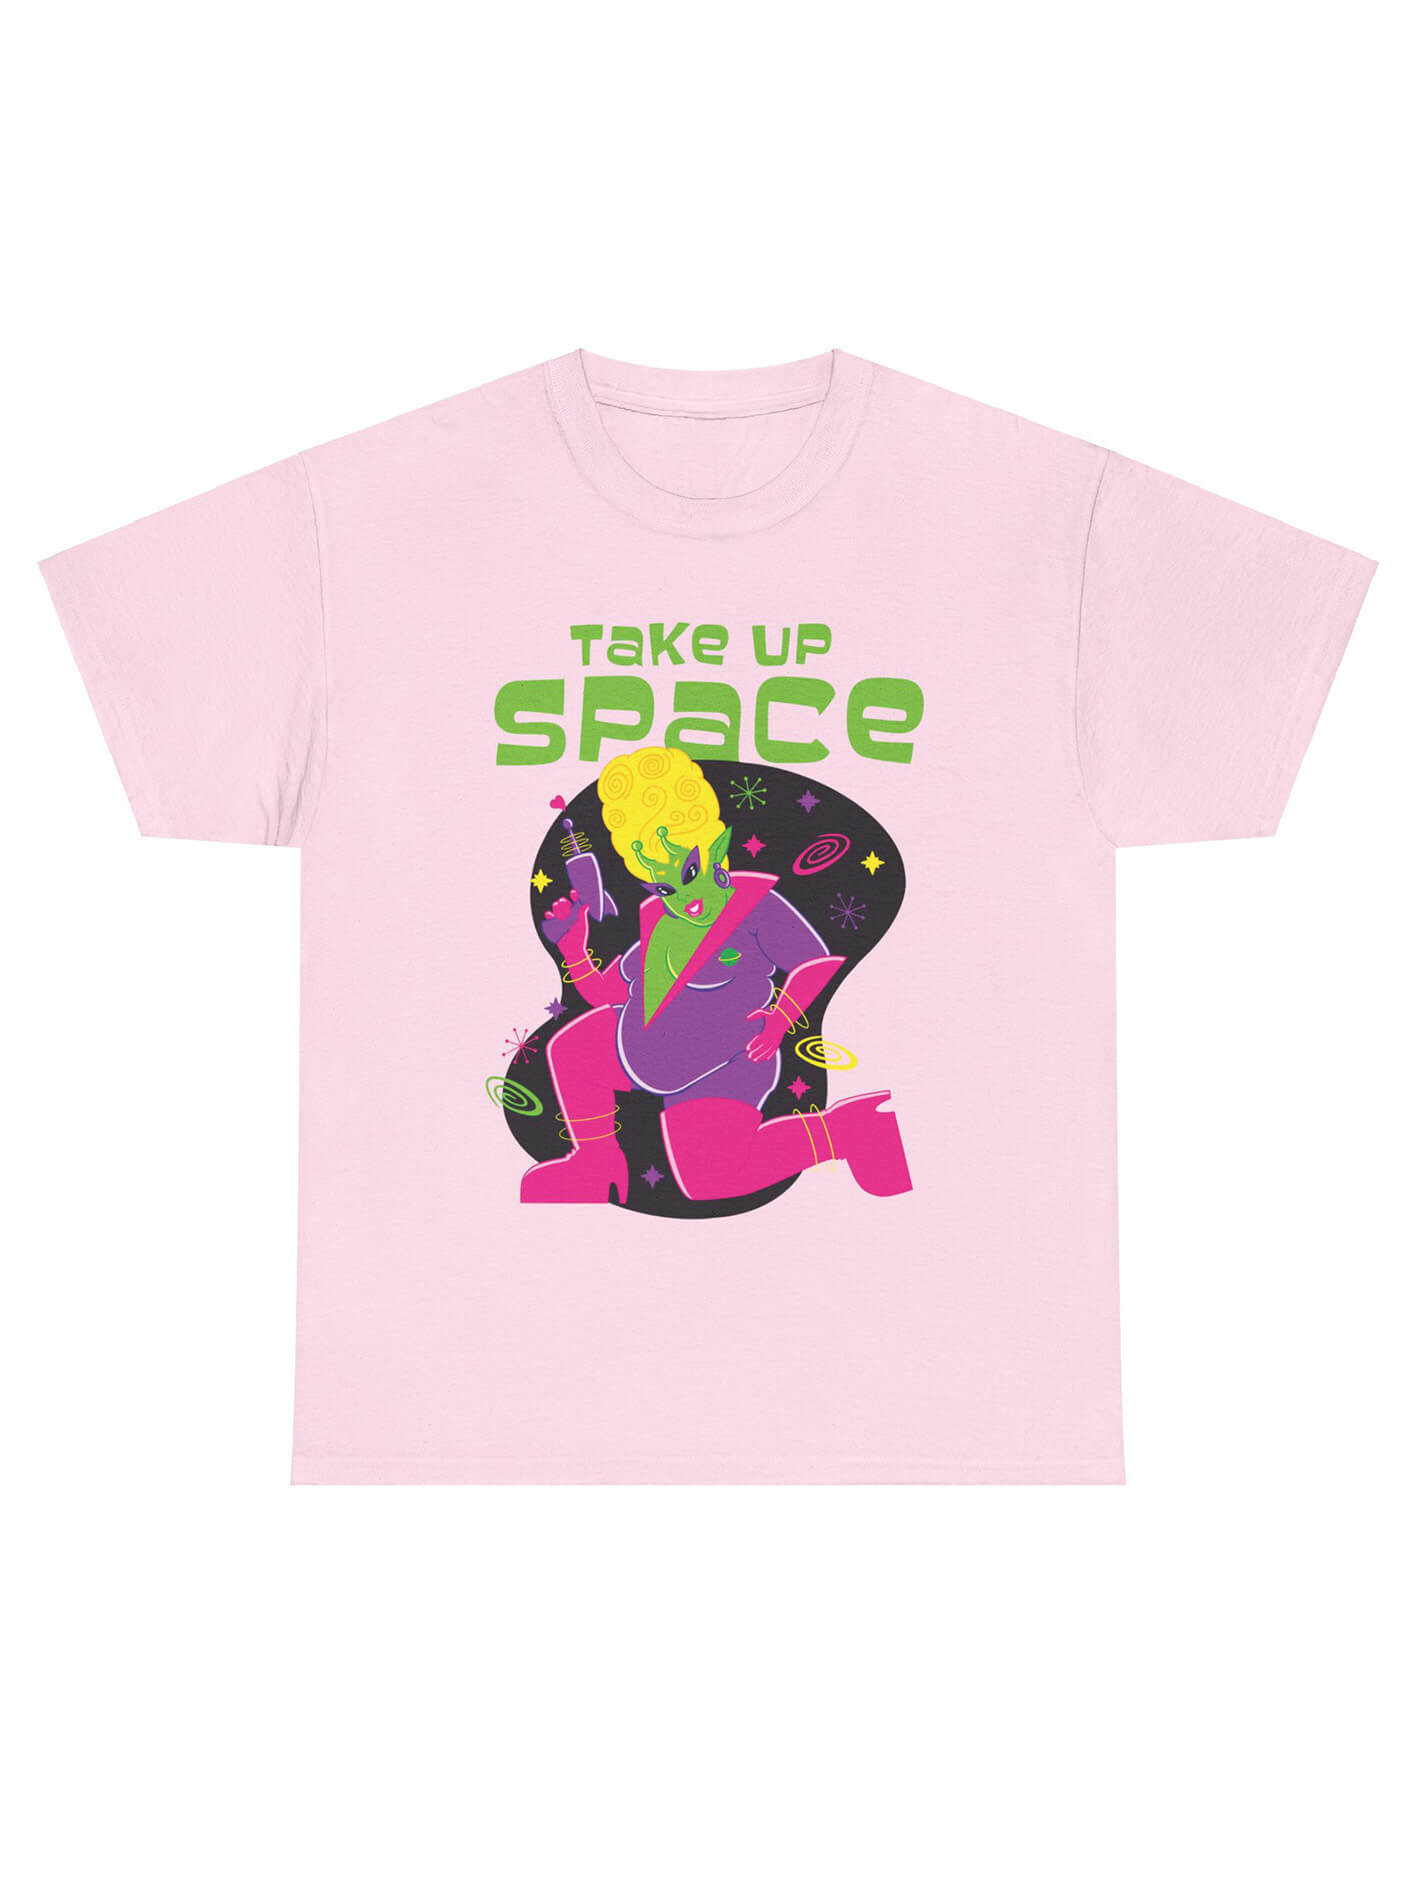 Plus size pink sci fi alien pinup t-shirt.